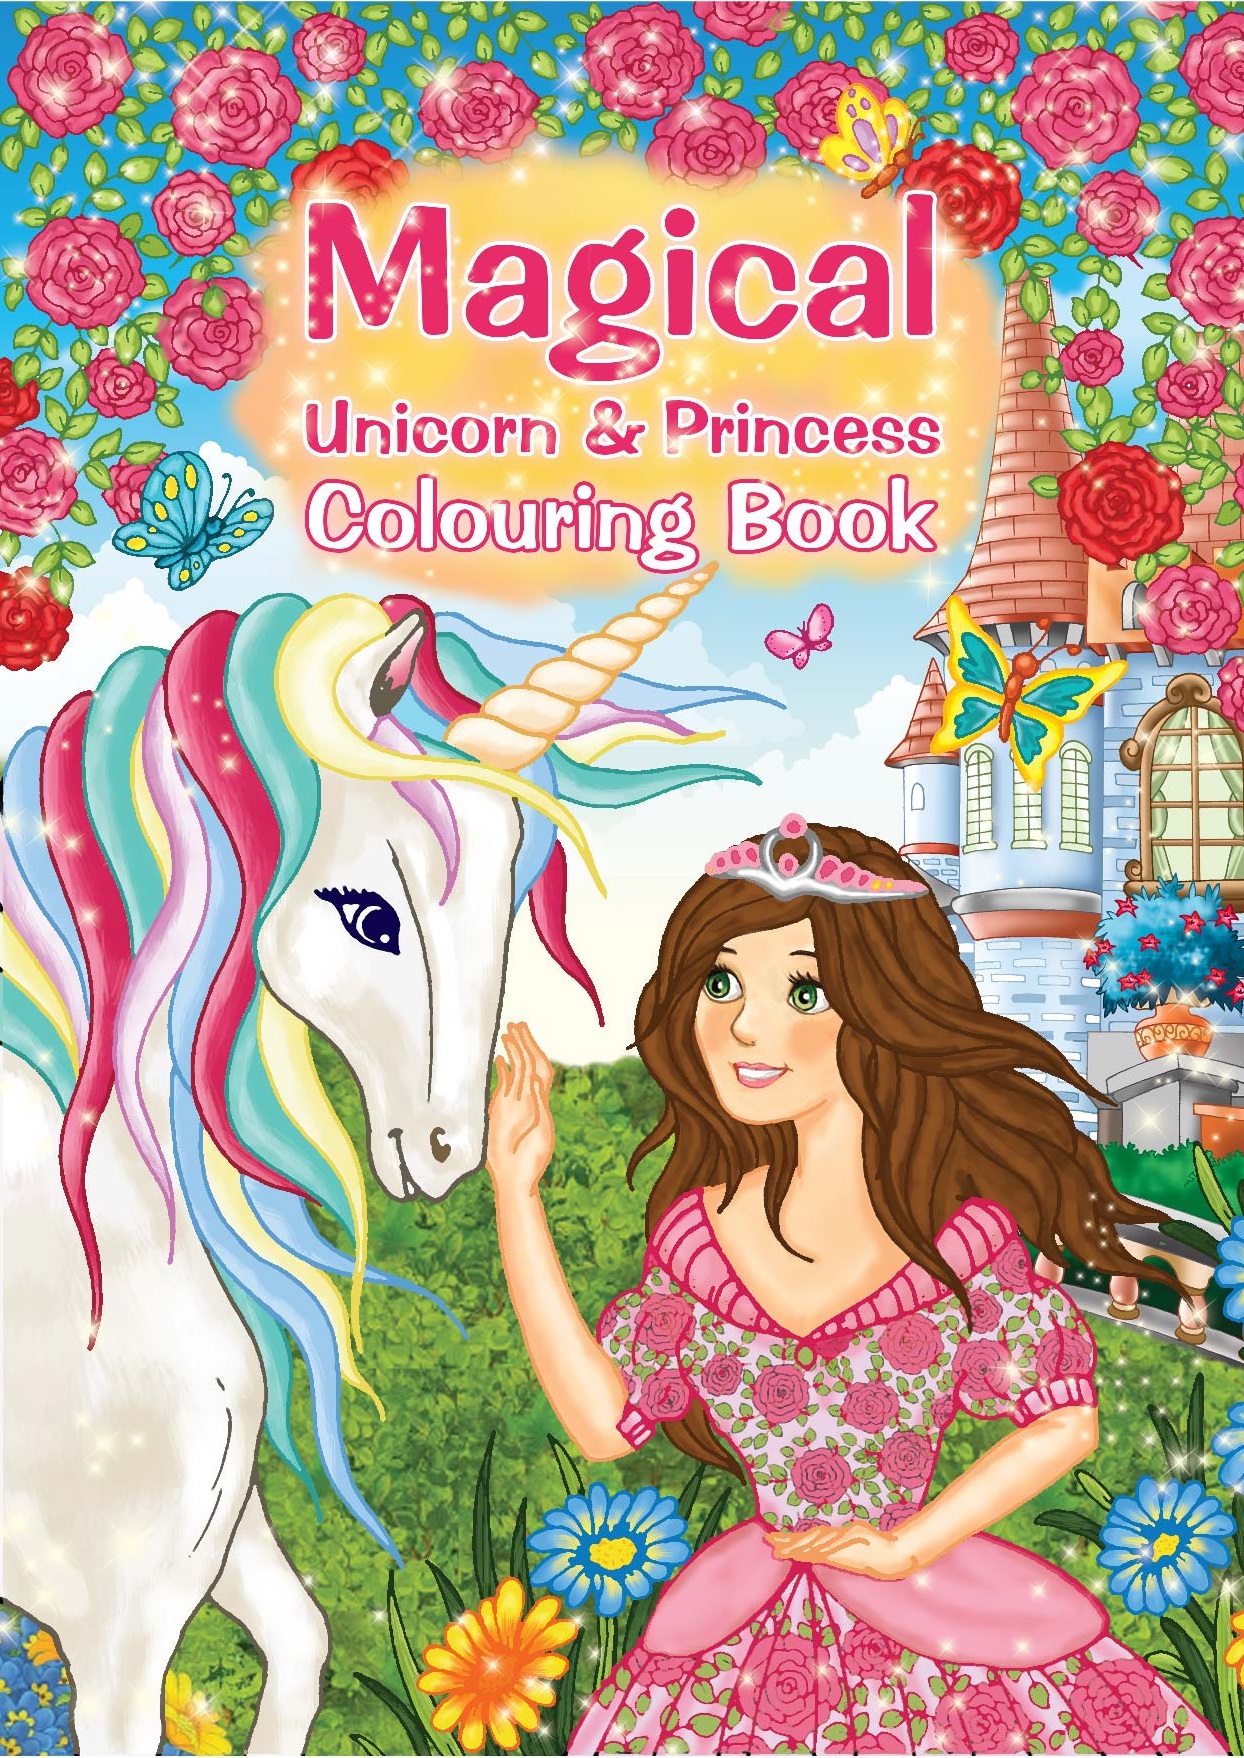 Colouring Book: Magical Unicorn & Princess